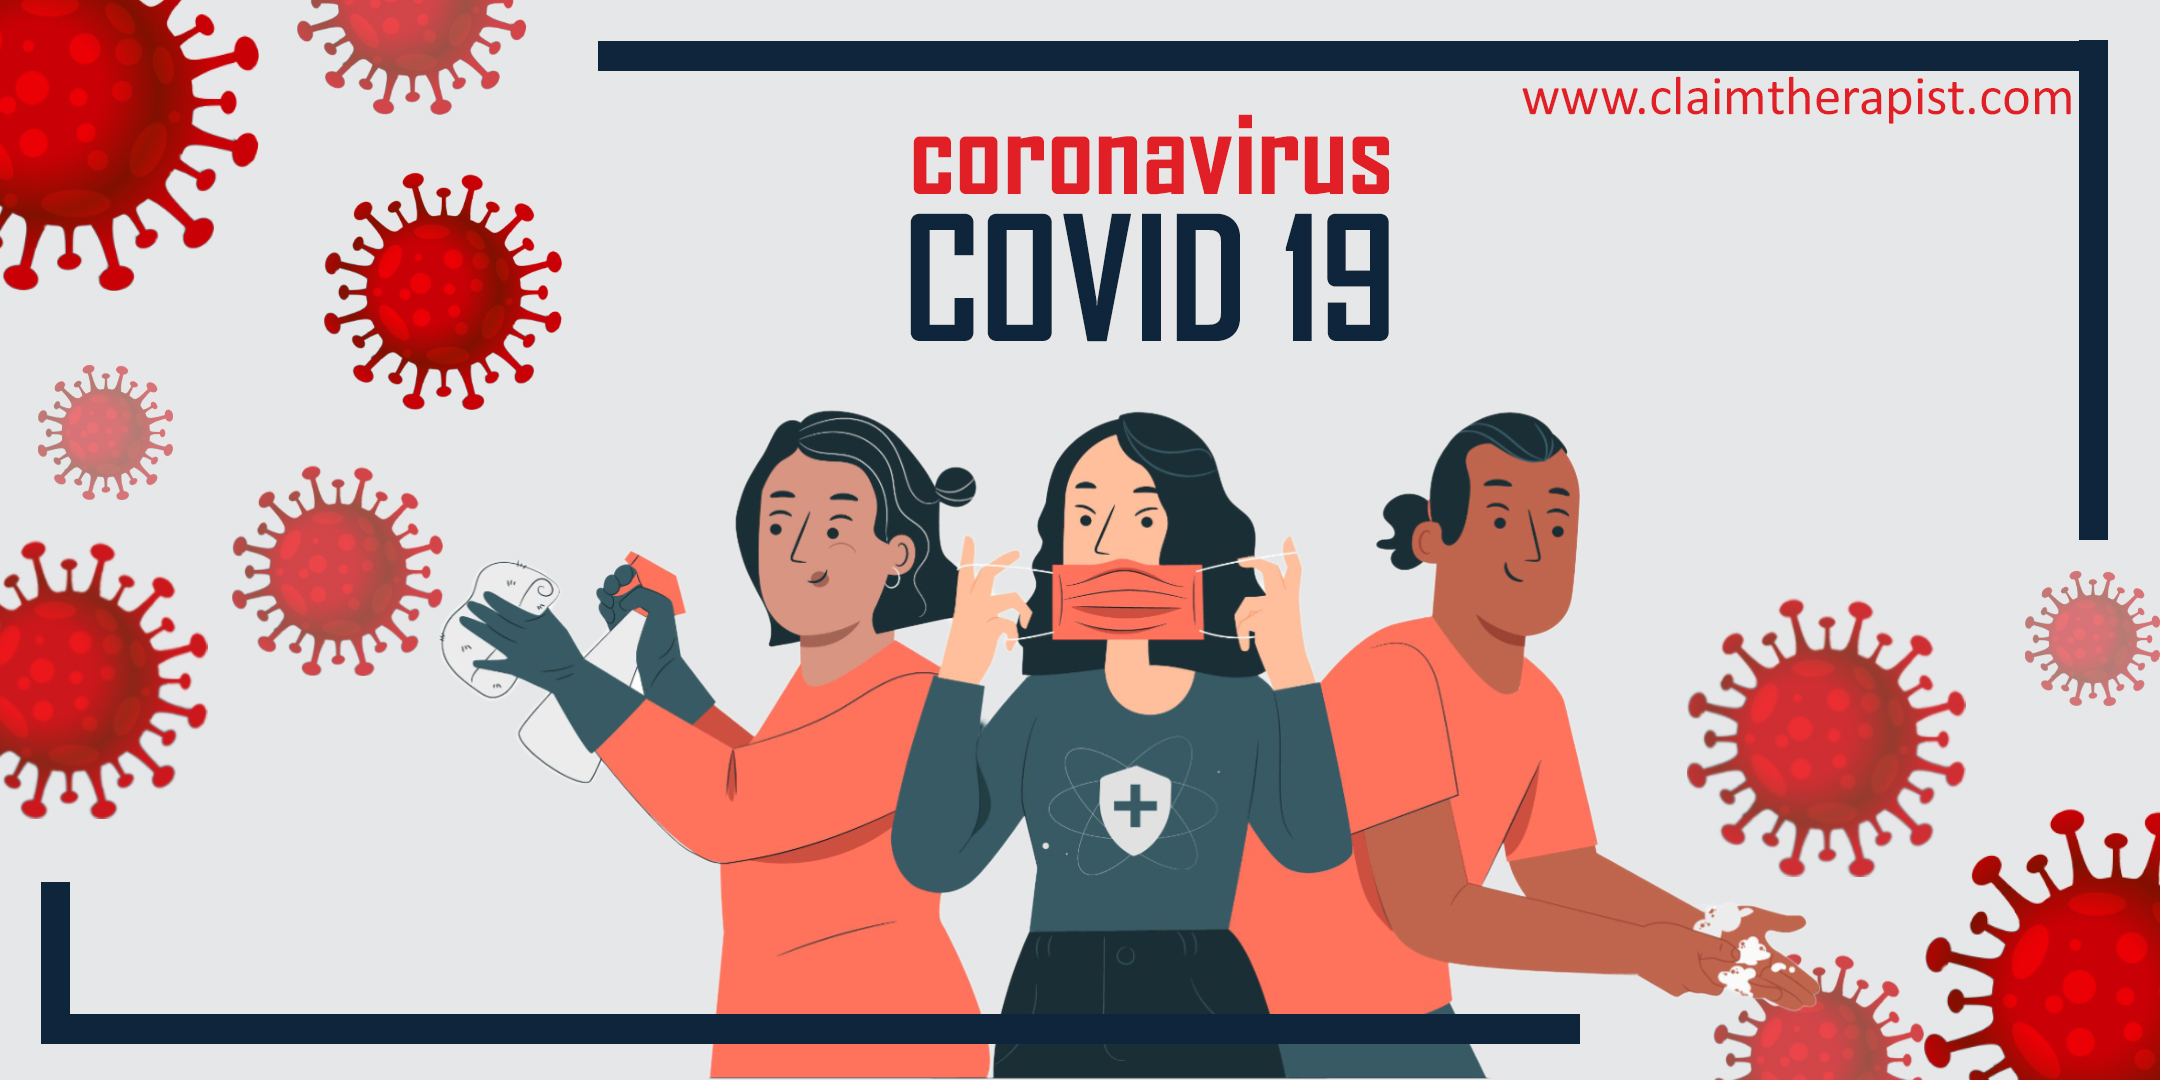 covid-19, coronavirus, fight corona